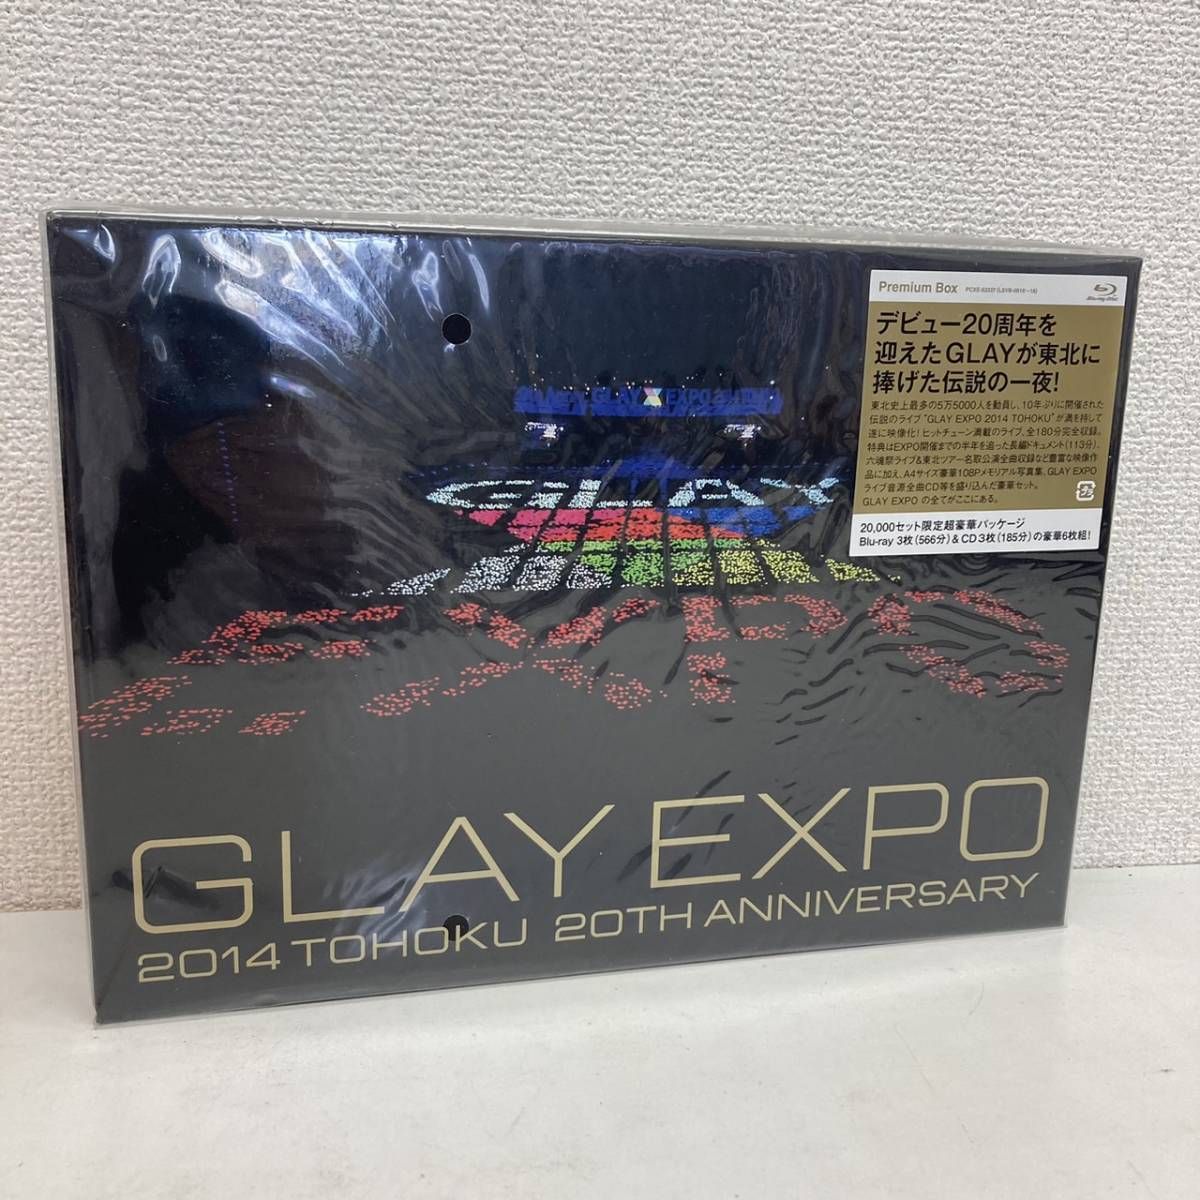 GLAY EXPO 2014 TOHOKU 20th Anniversary Premium Box Blu-ray３枚